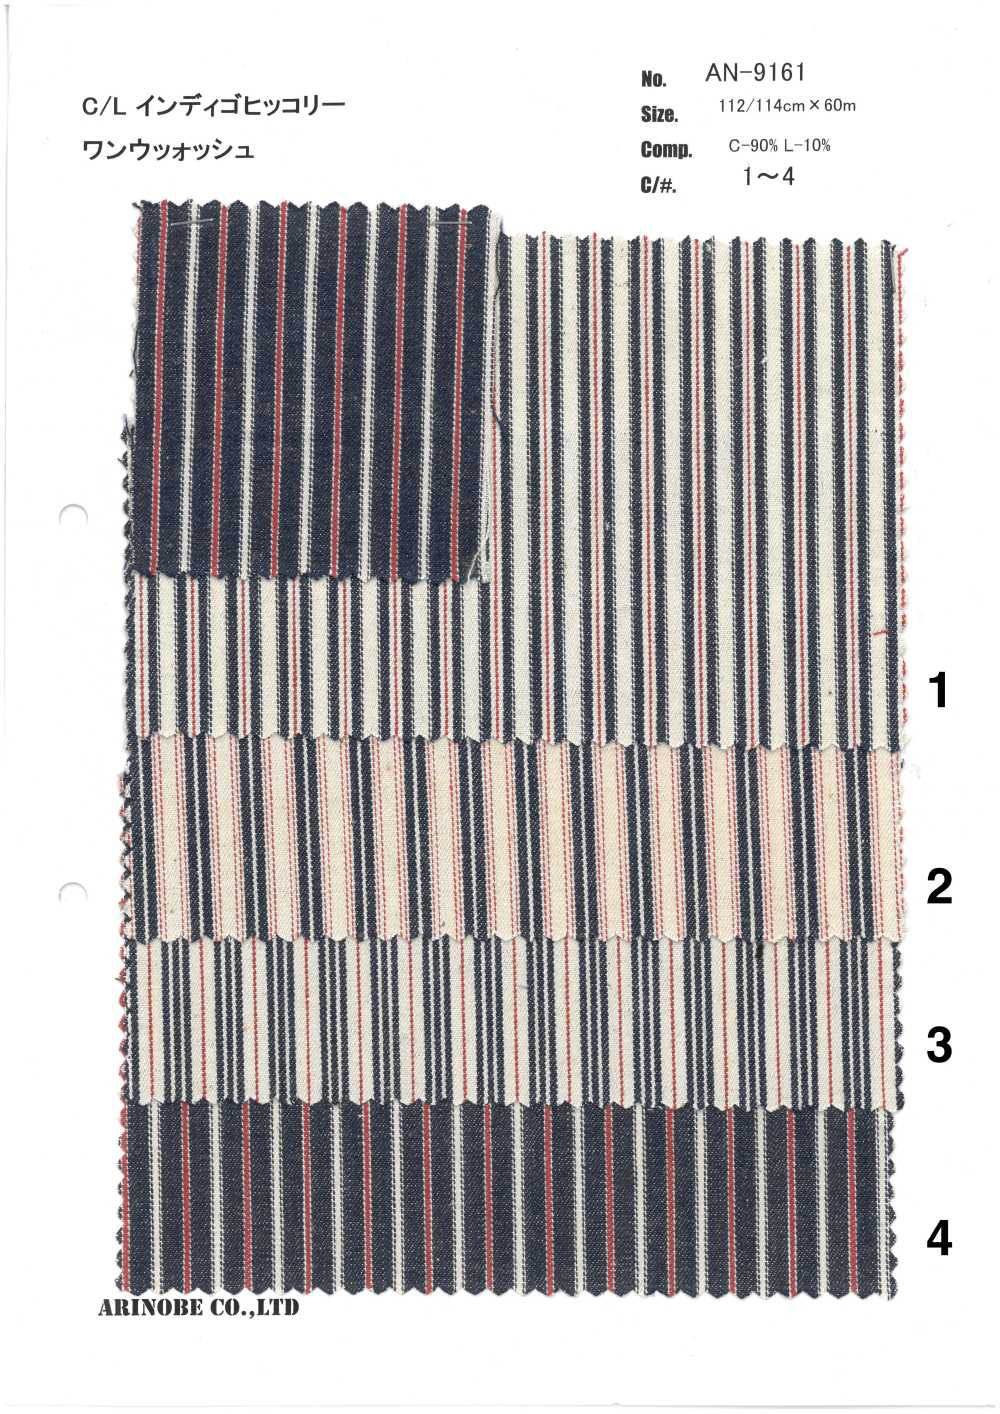 AN-9161 Leinen Indigo-Hickory[Textilgewebe] ARINOBE CO., LTD.